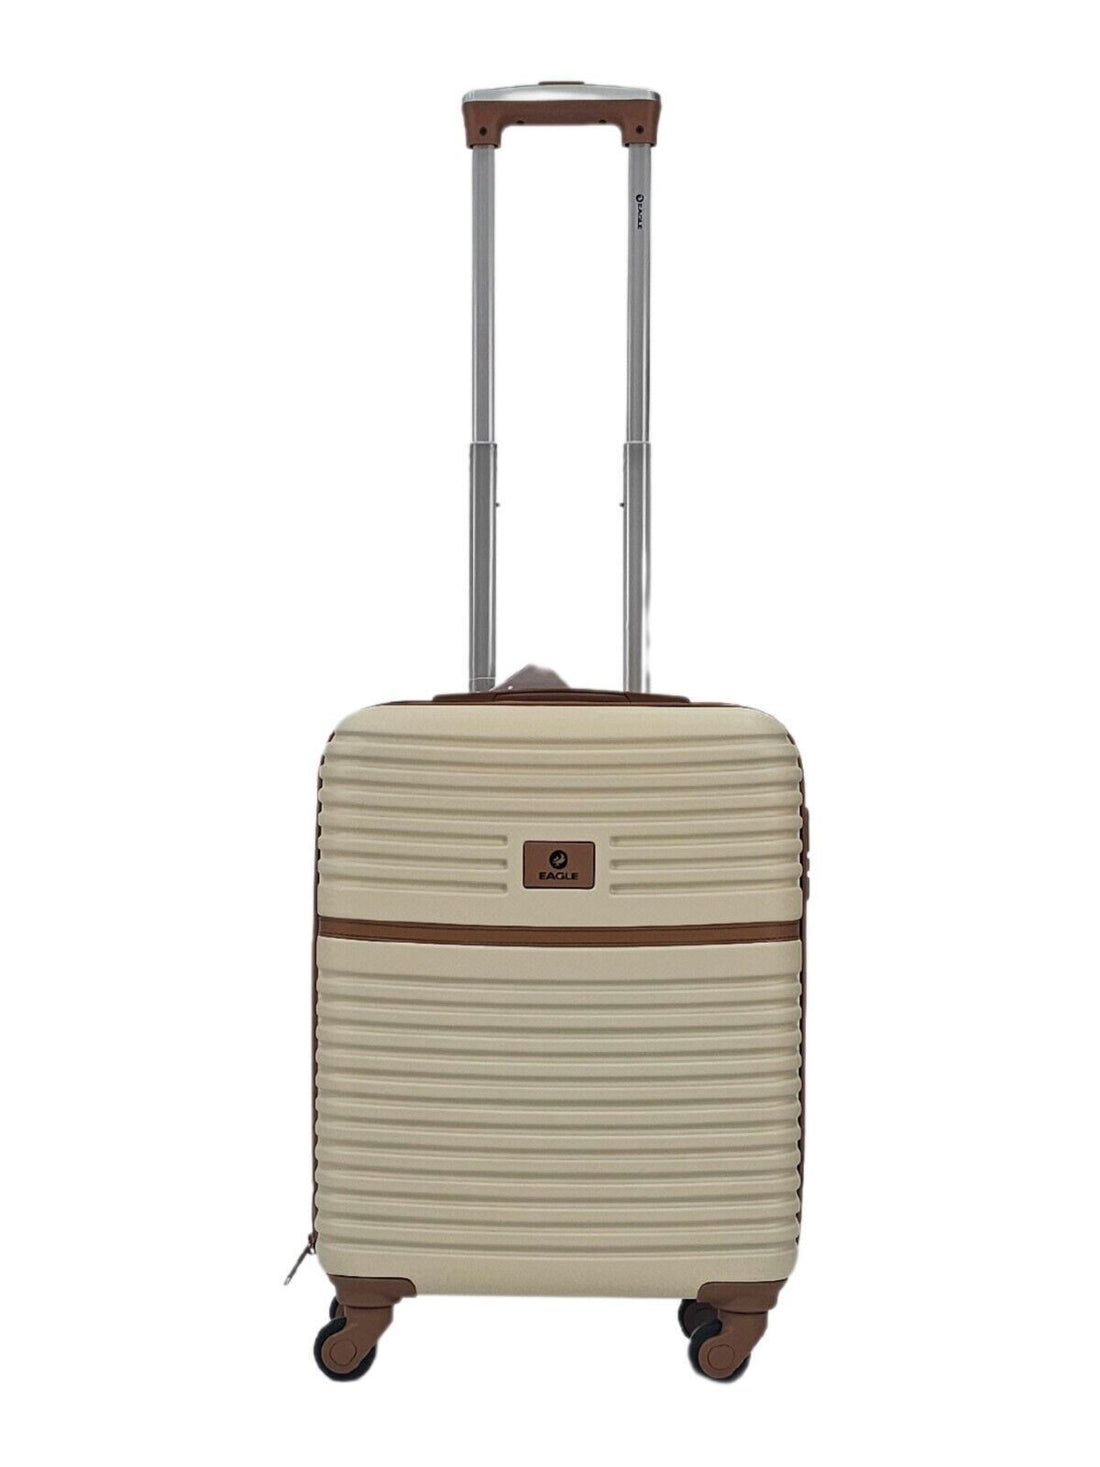 Bridgeport Cabin Hard Shell Suitcase in Cream